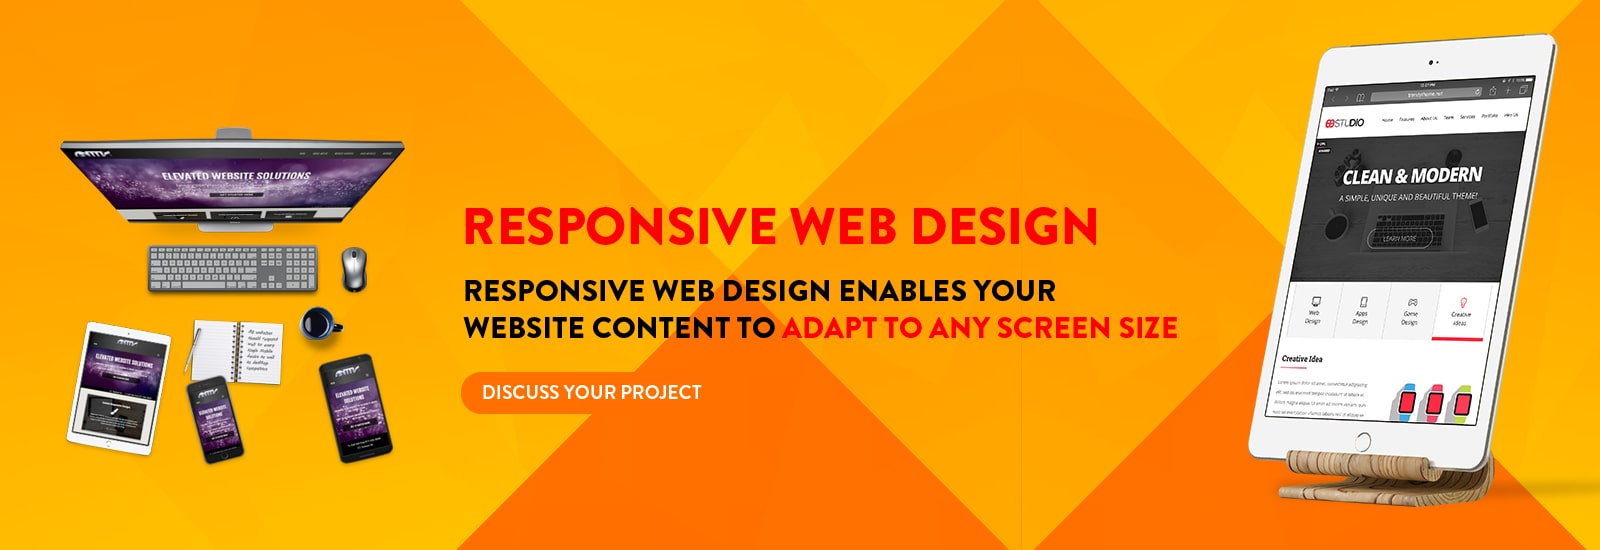 Web Design Company in Pakistan